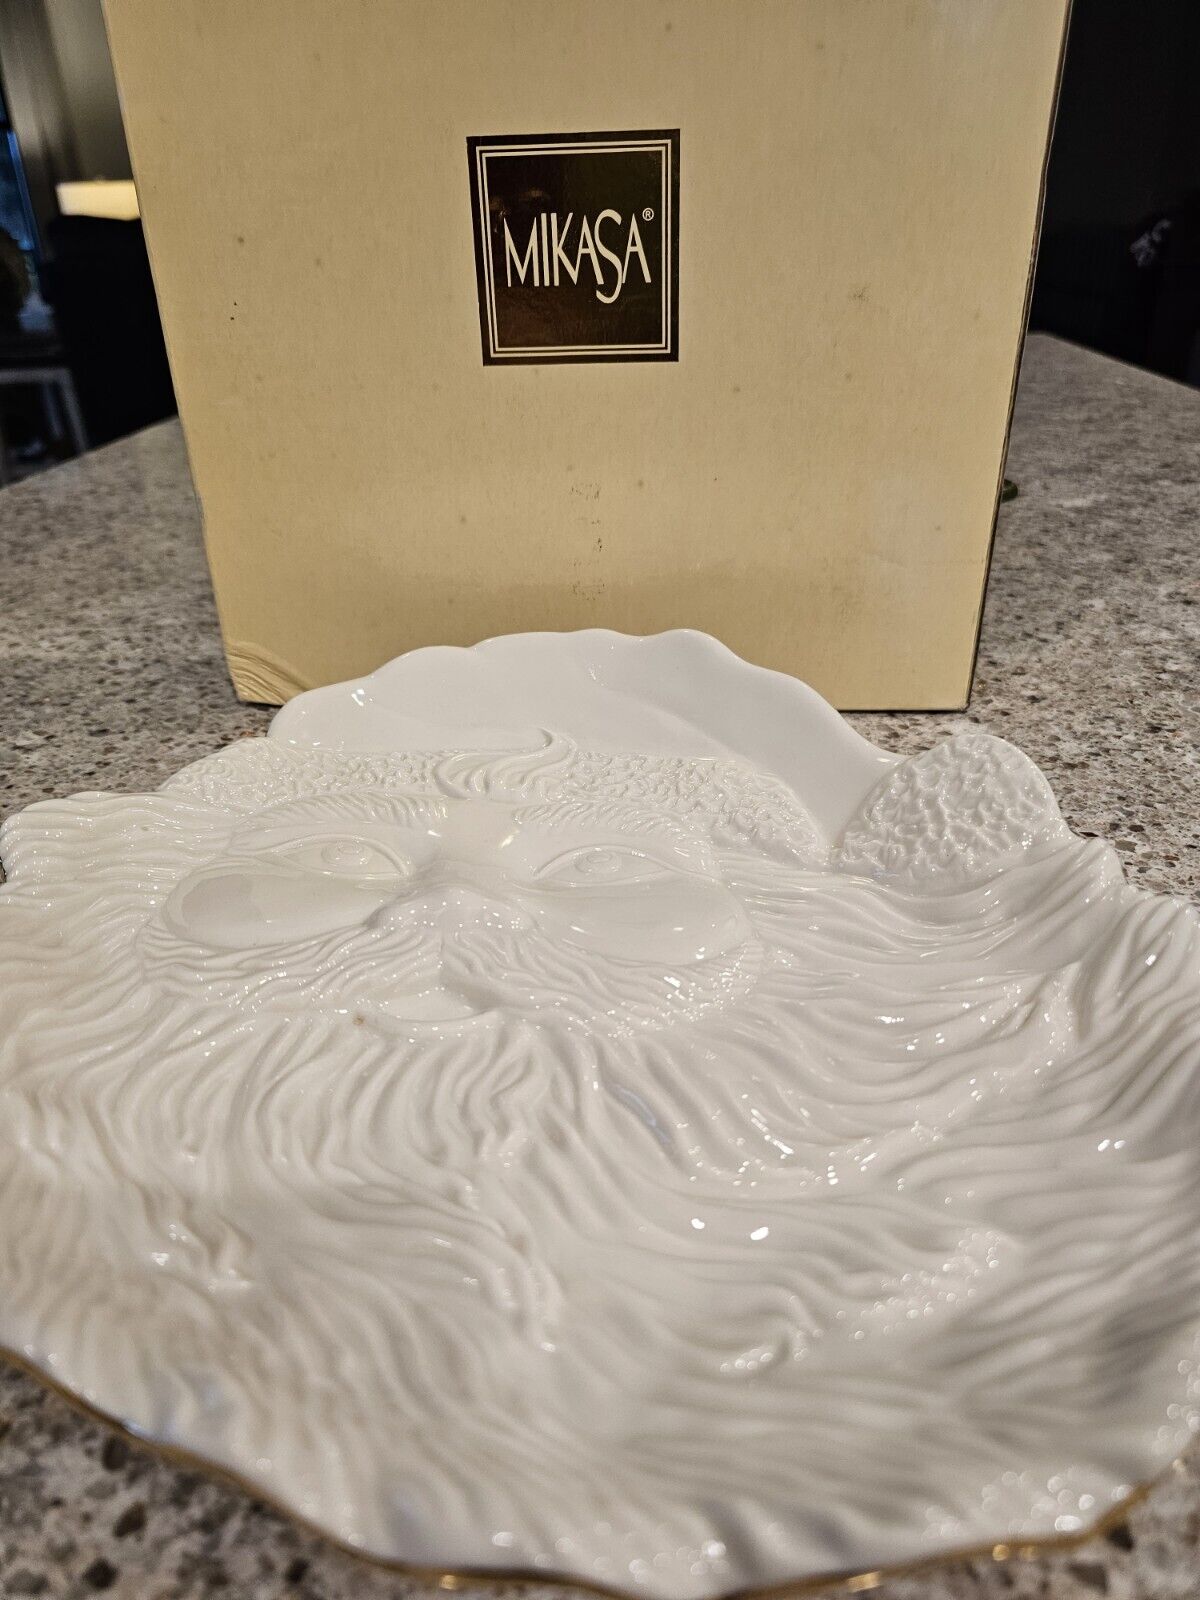 Mikasa Porcelain Santa Cookie Plate With Original Box.